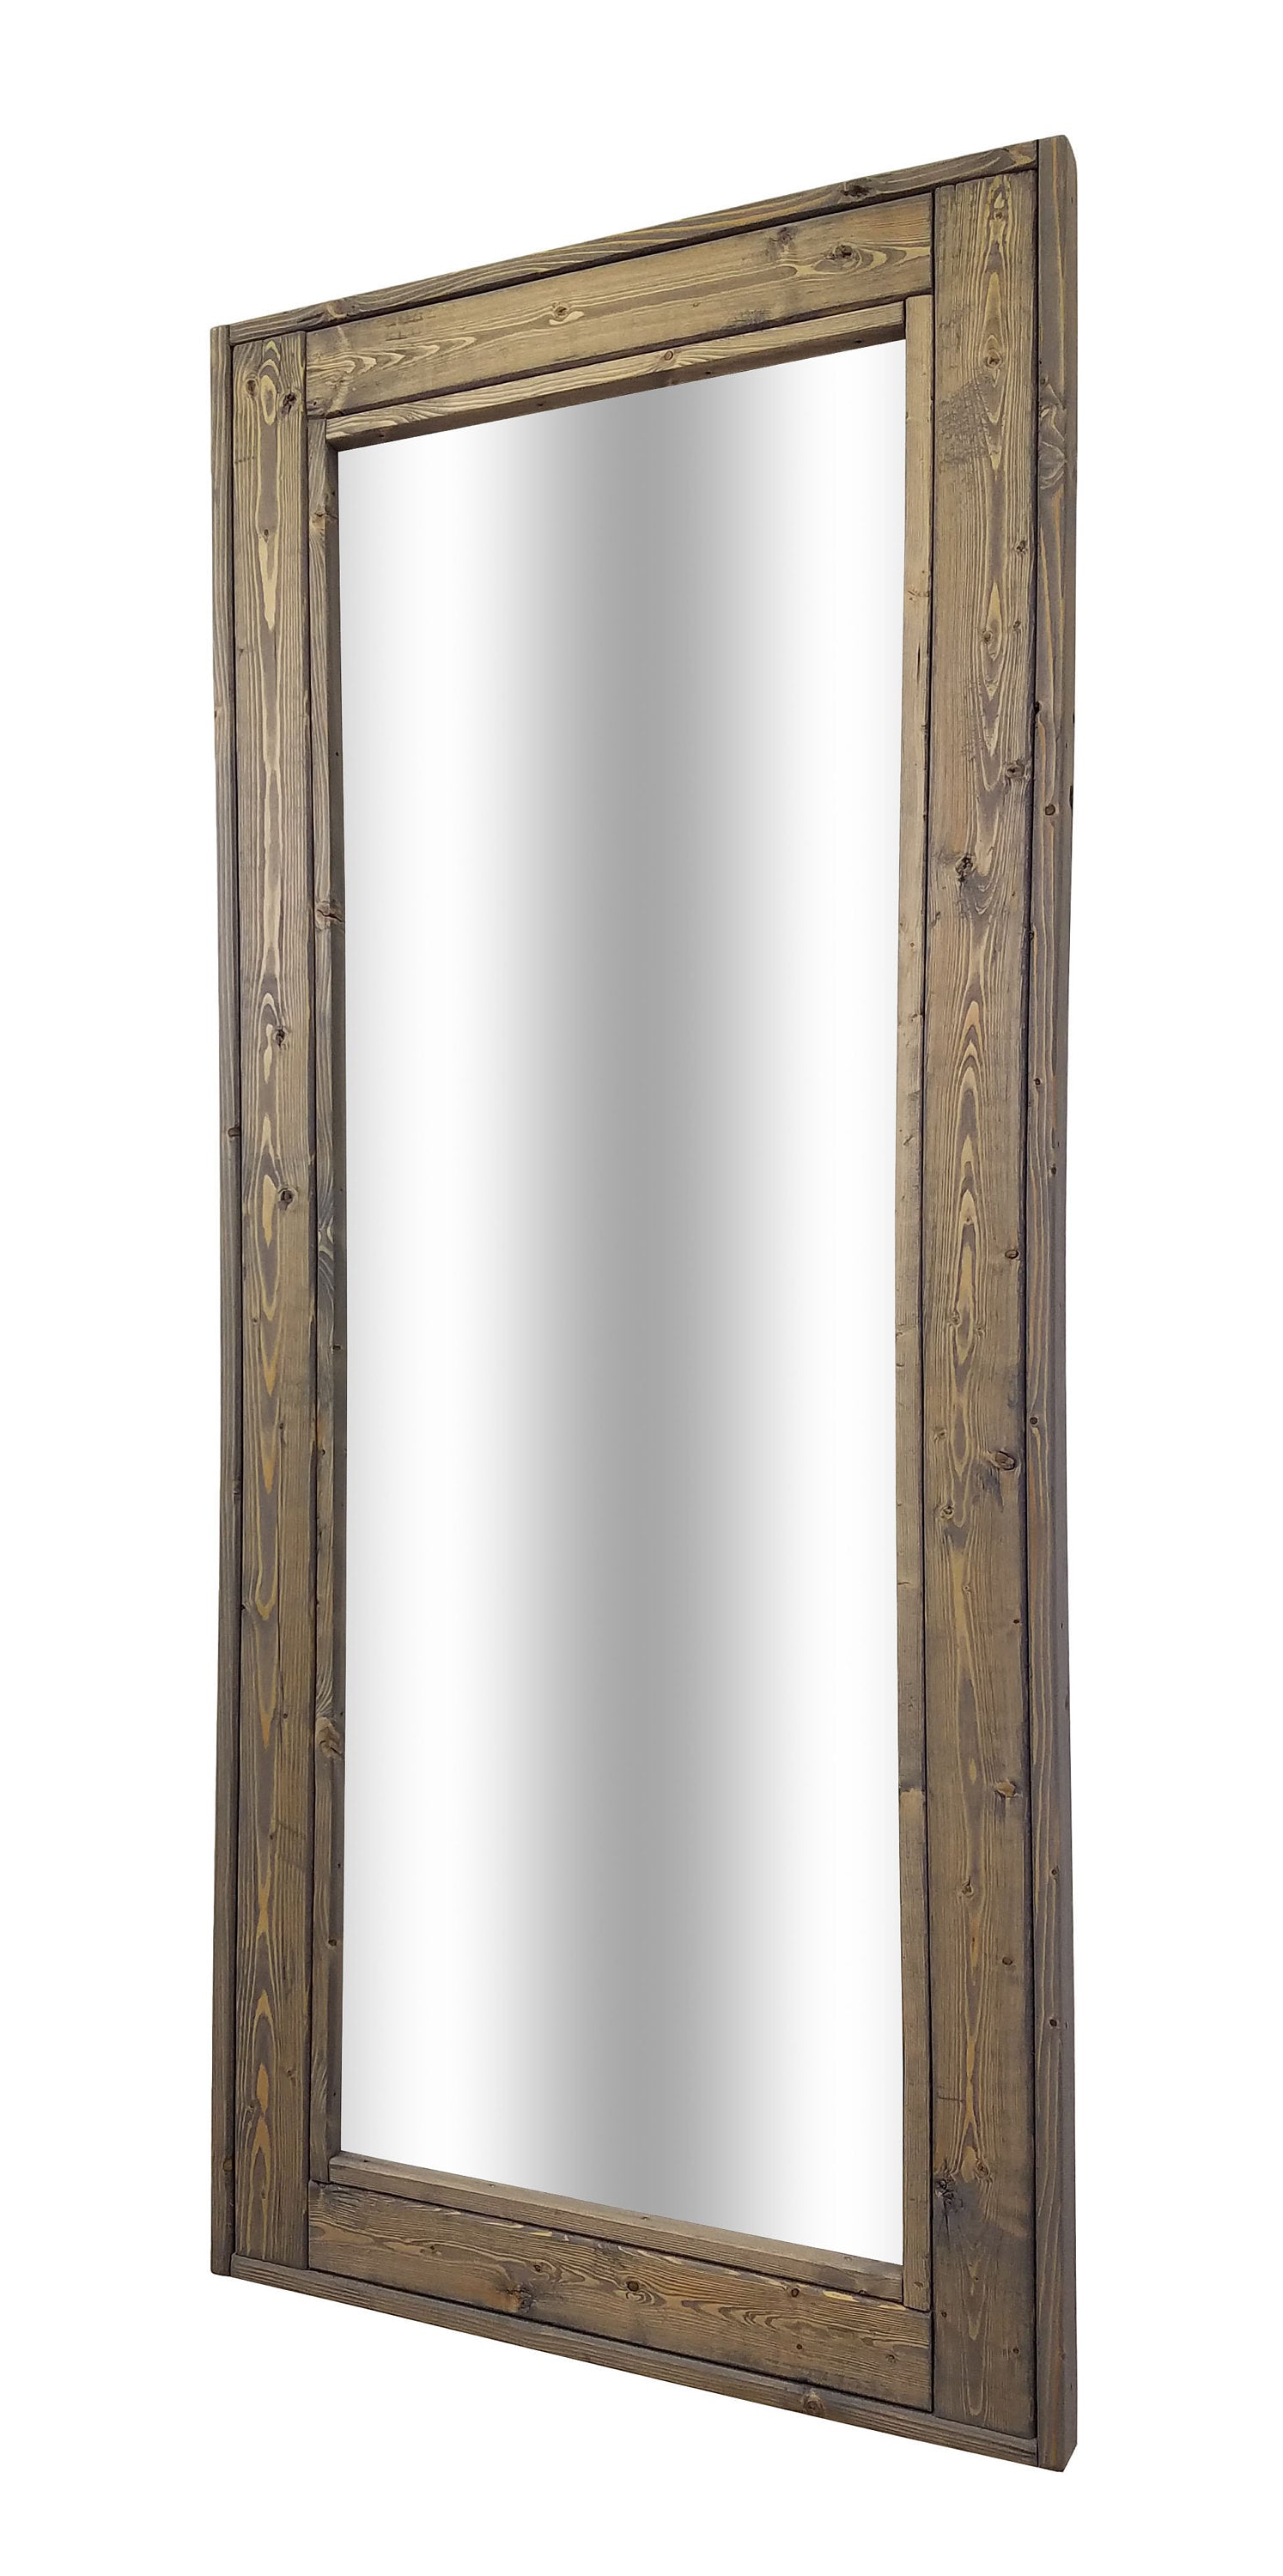 Herringbone Reclaimed Wood Full Length Mirror, Handmade in the USA